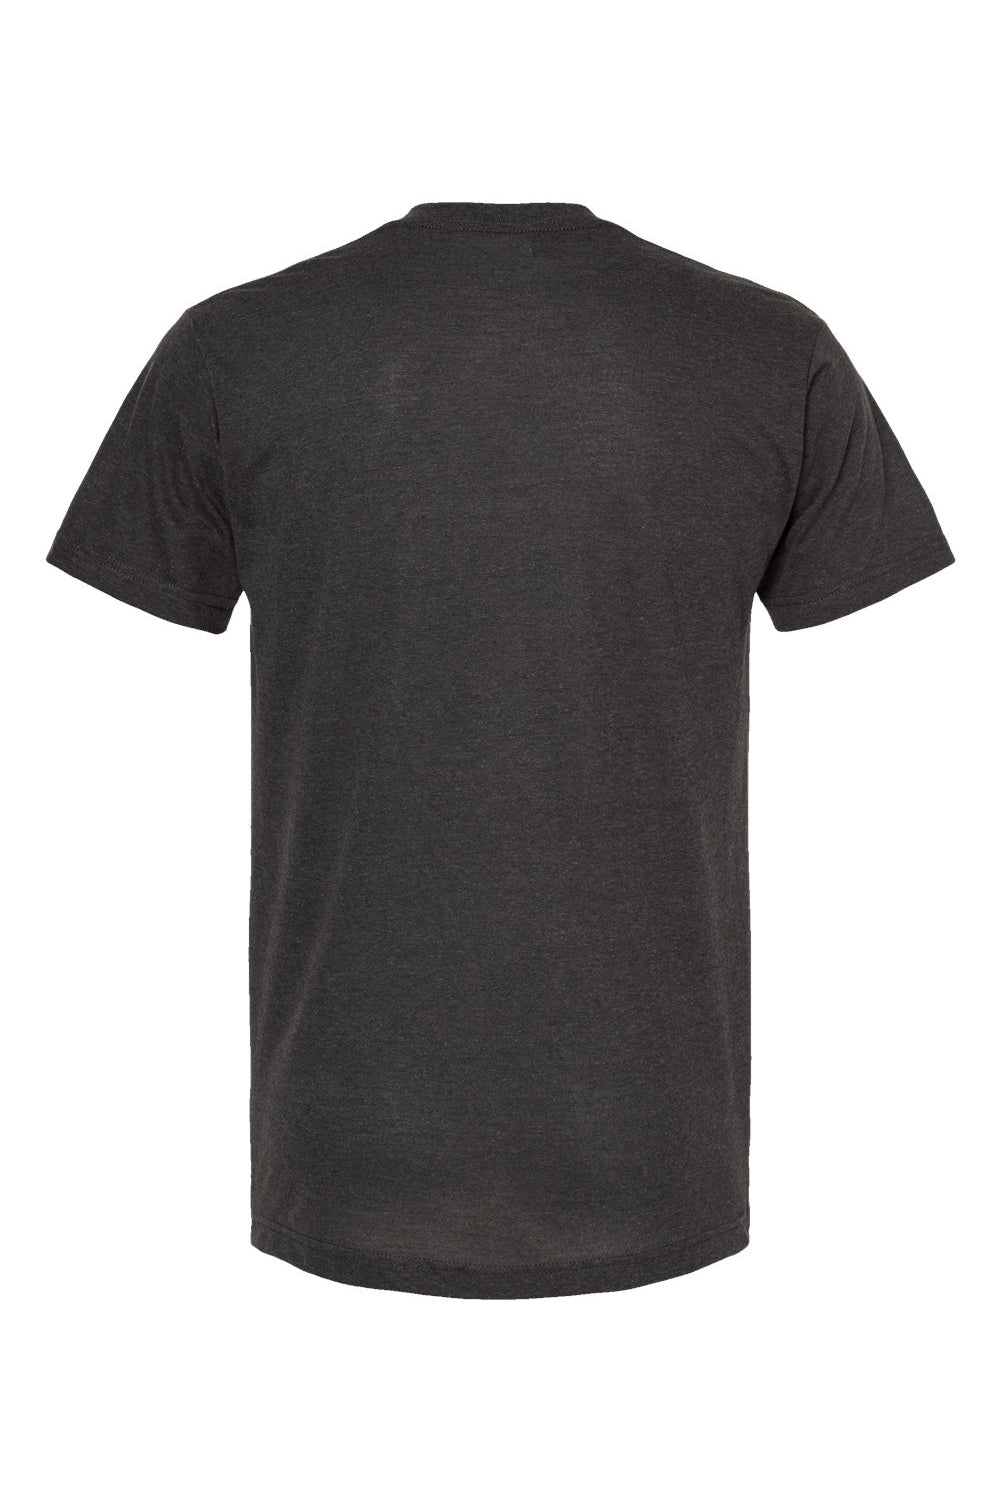 Tultex 207 Mens Poly-Rich Short Sleeve V-Neck T-Shirt Heather Graphite Grey Flat Back